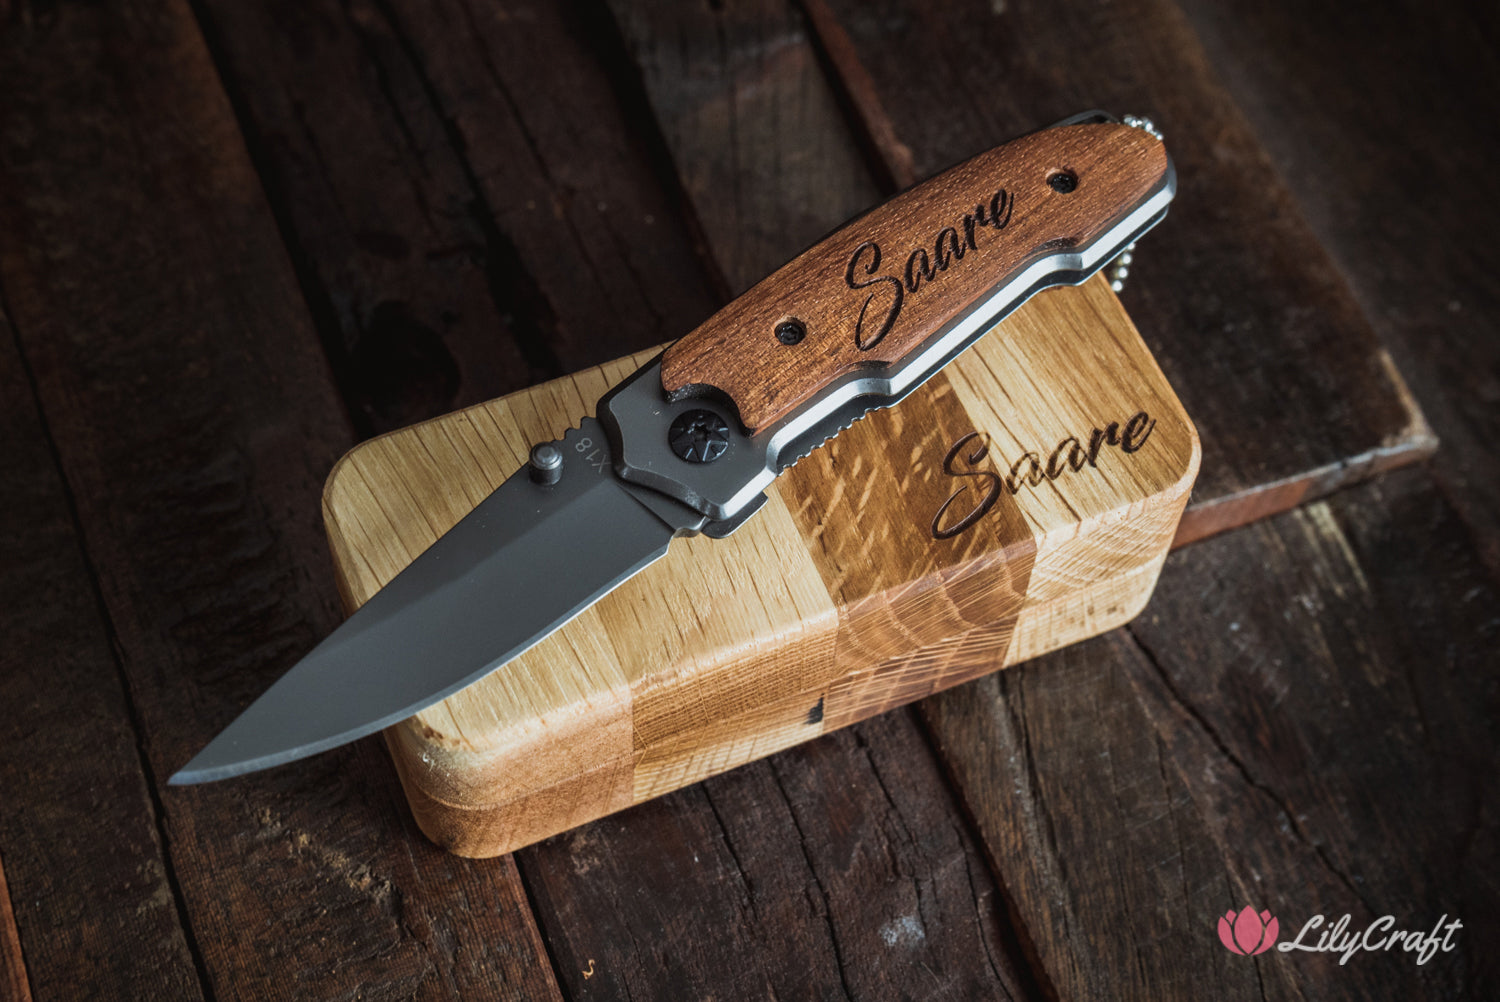 Rostfrei Classic Gentlemen's Pocket Knife: Ebony Wood and